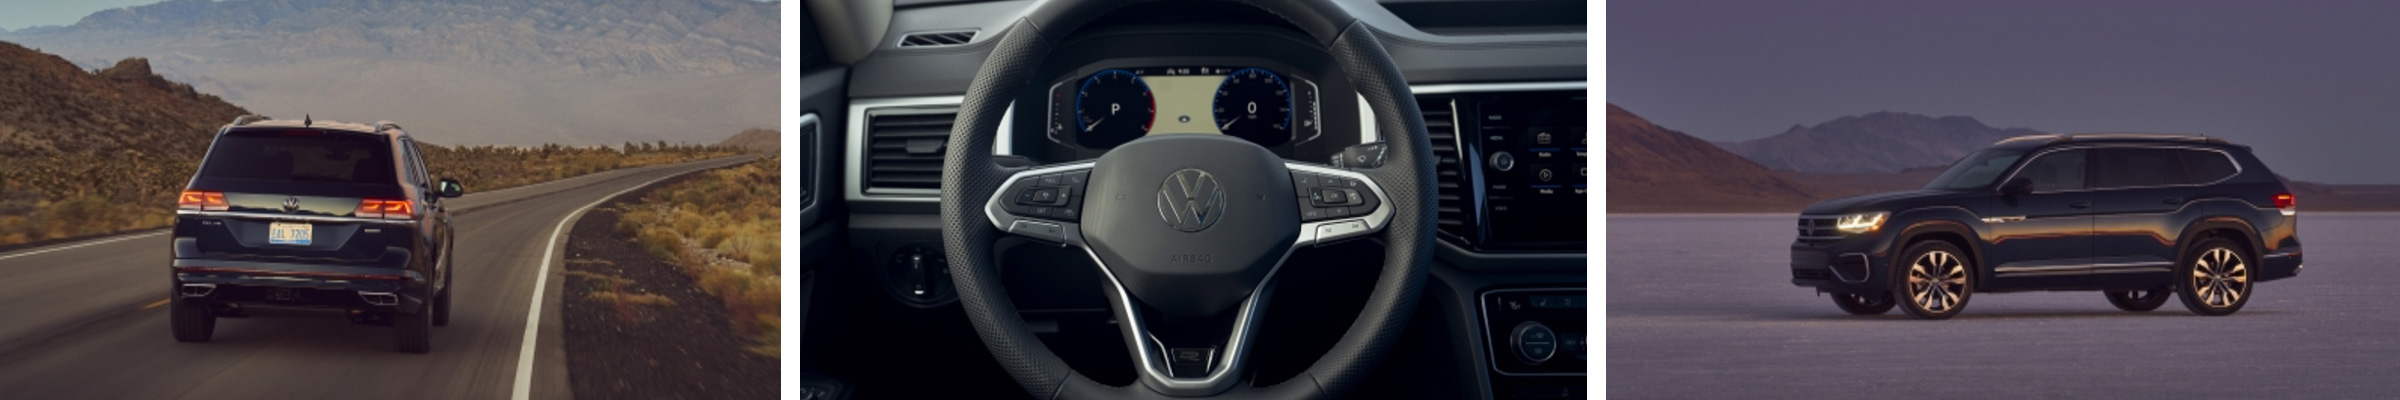 2021.5 Volkswagen Atlas For Sale Near Fort Collins, CO